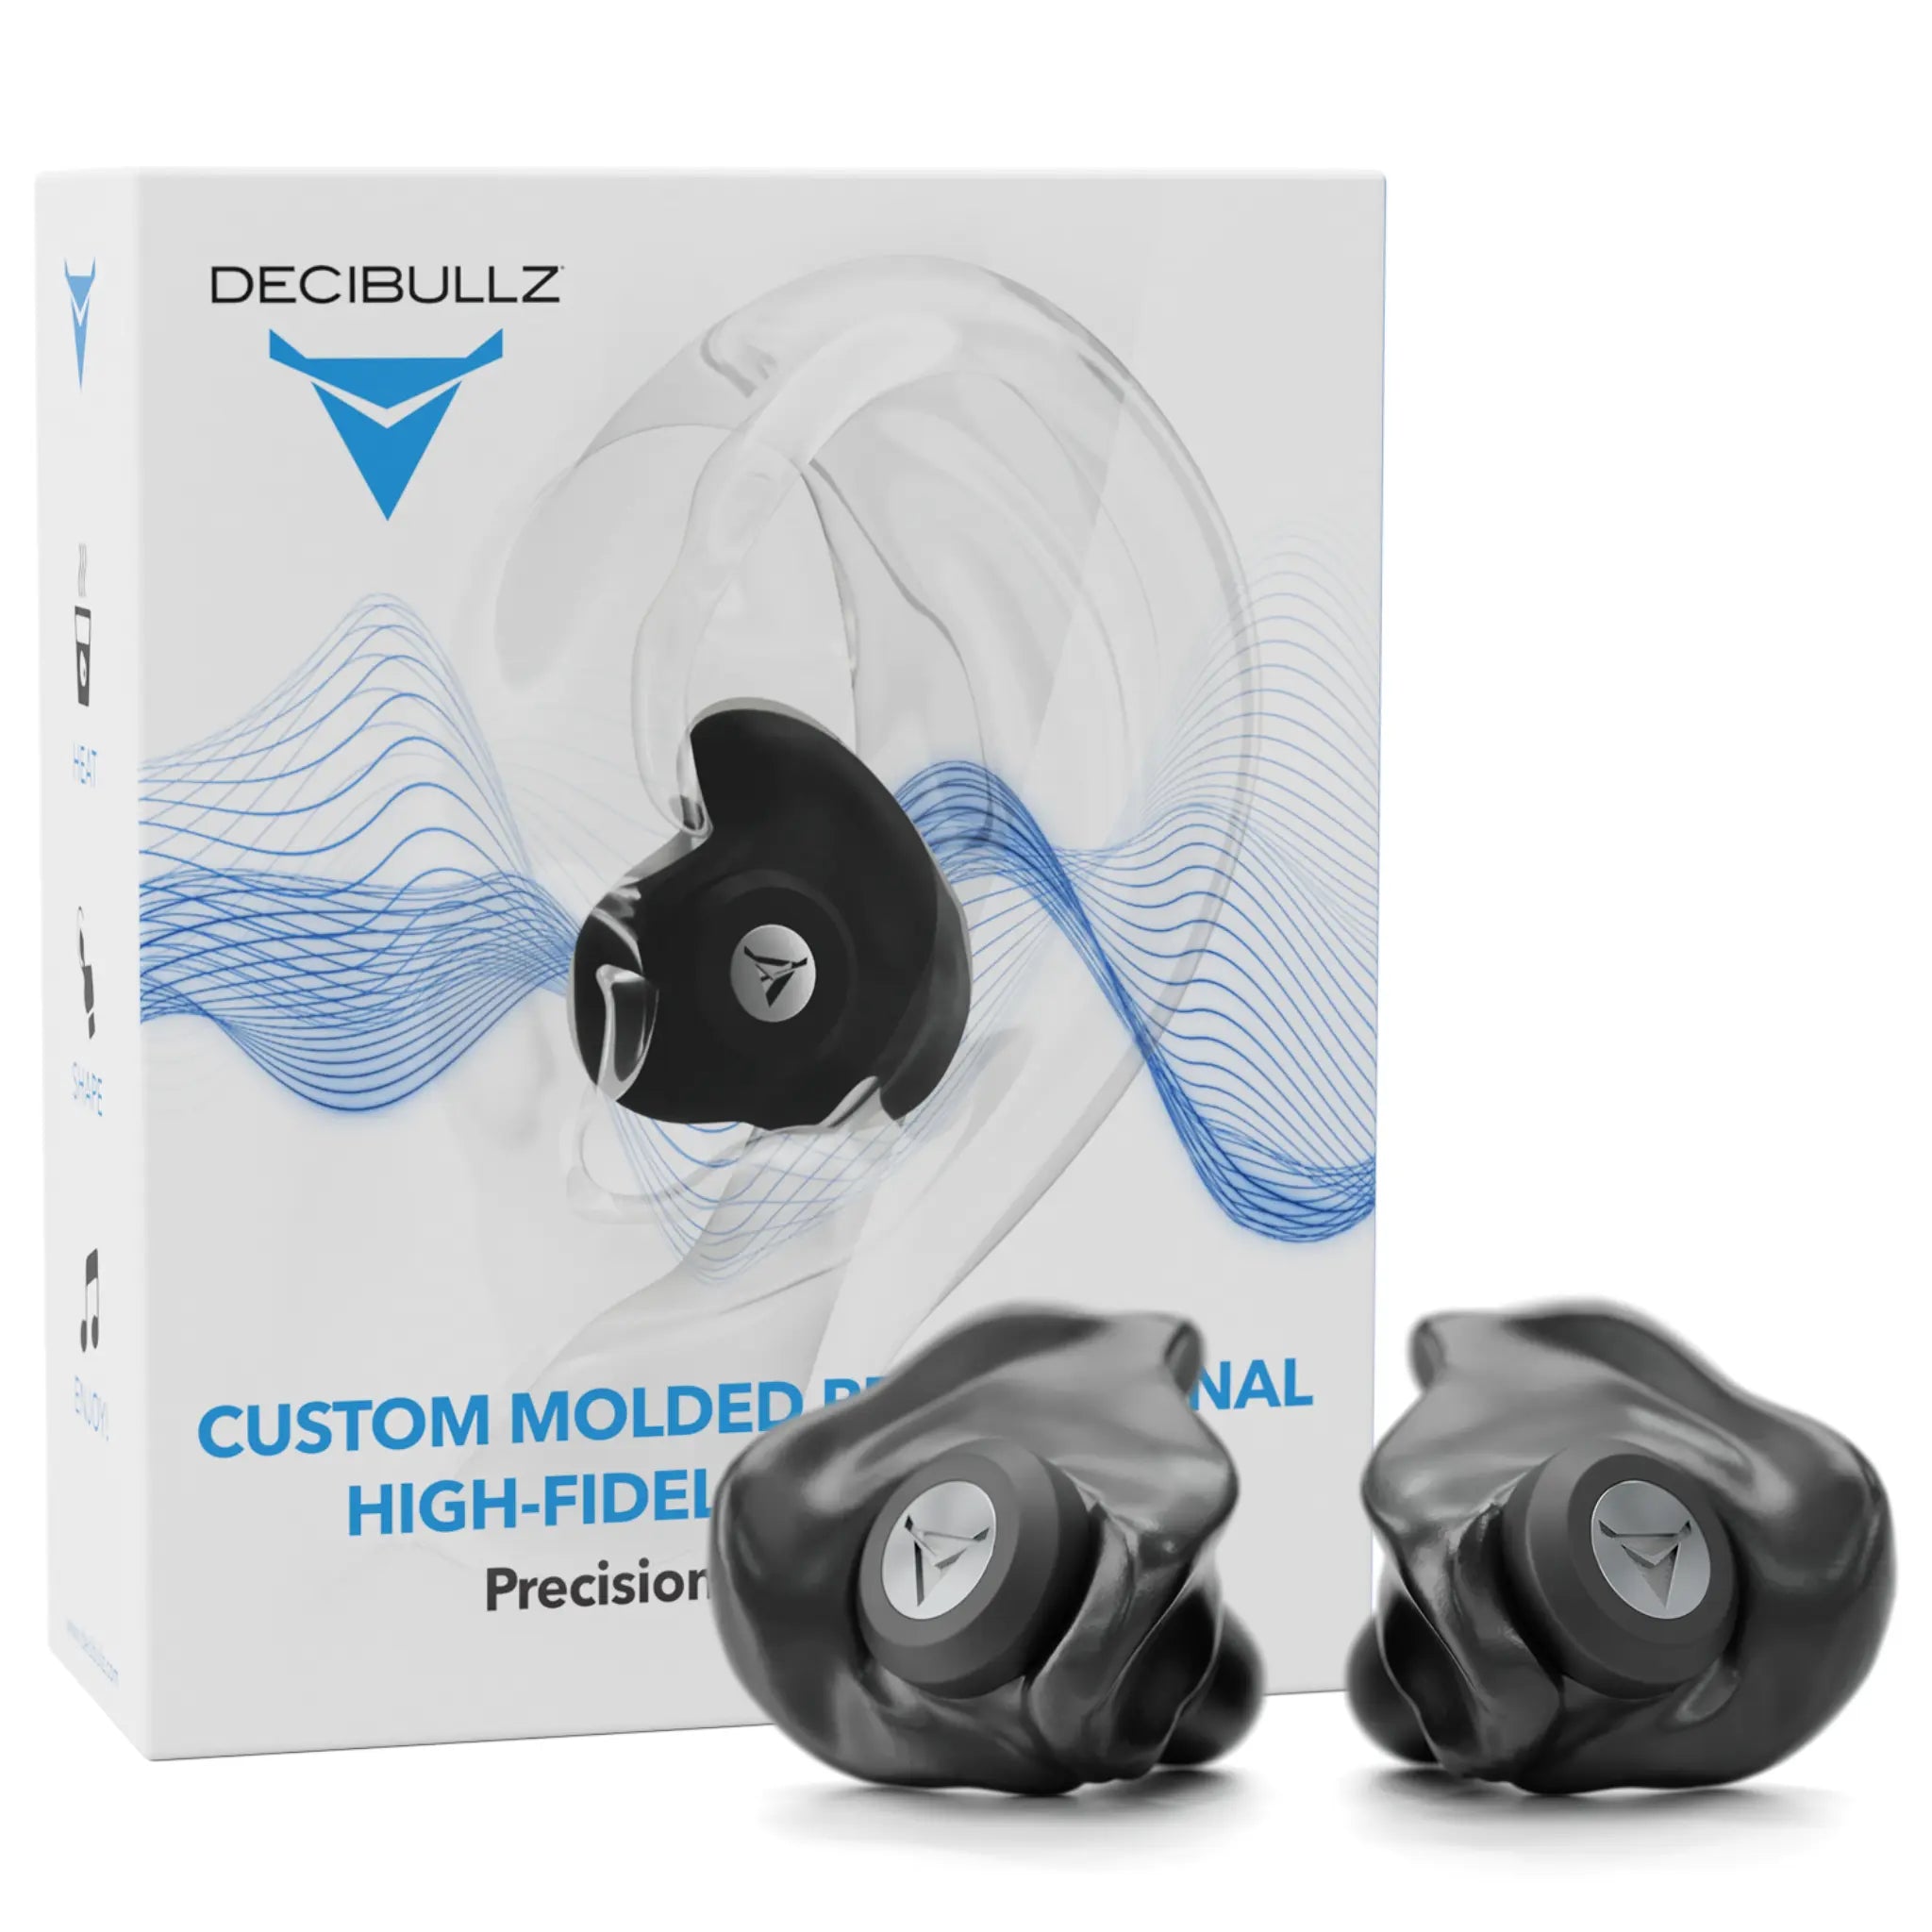 Custom Molded Professional High-Fidelity Filter Earplugs